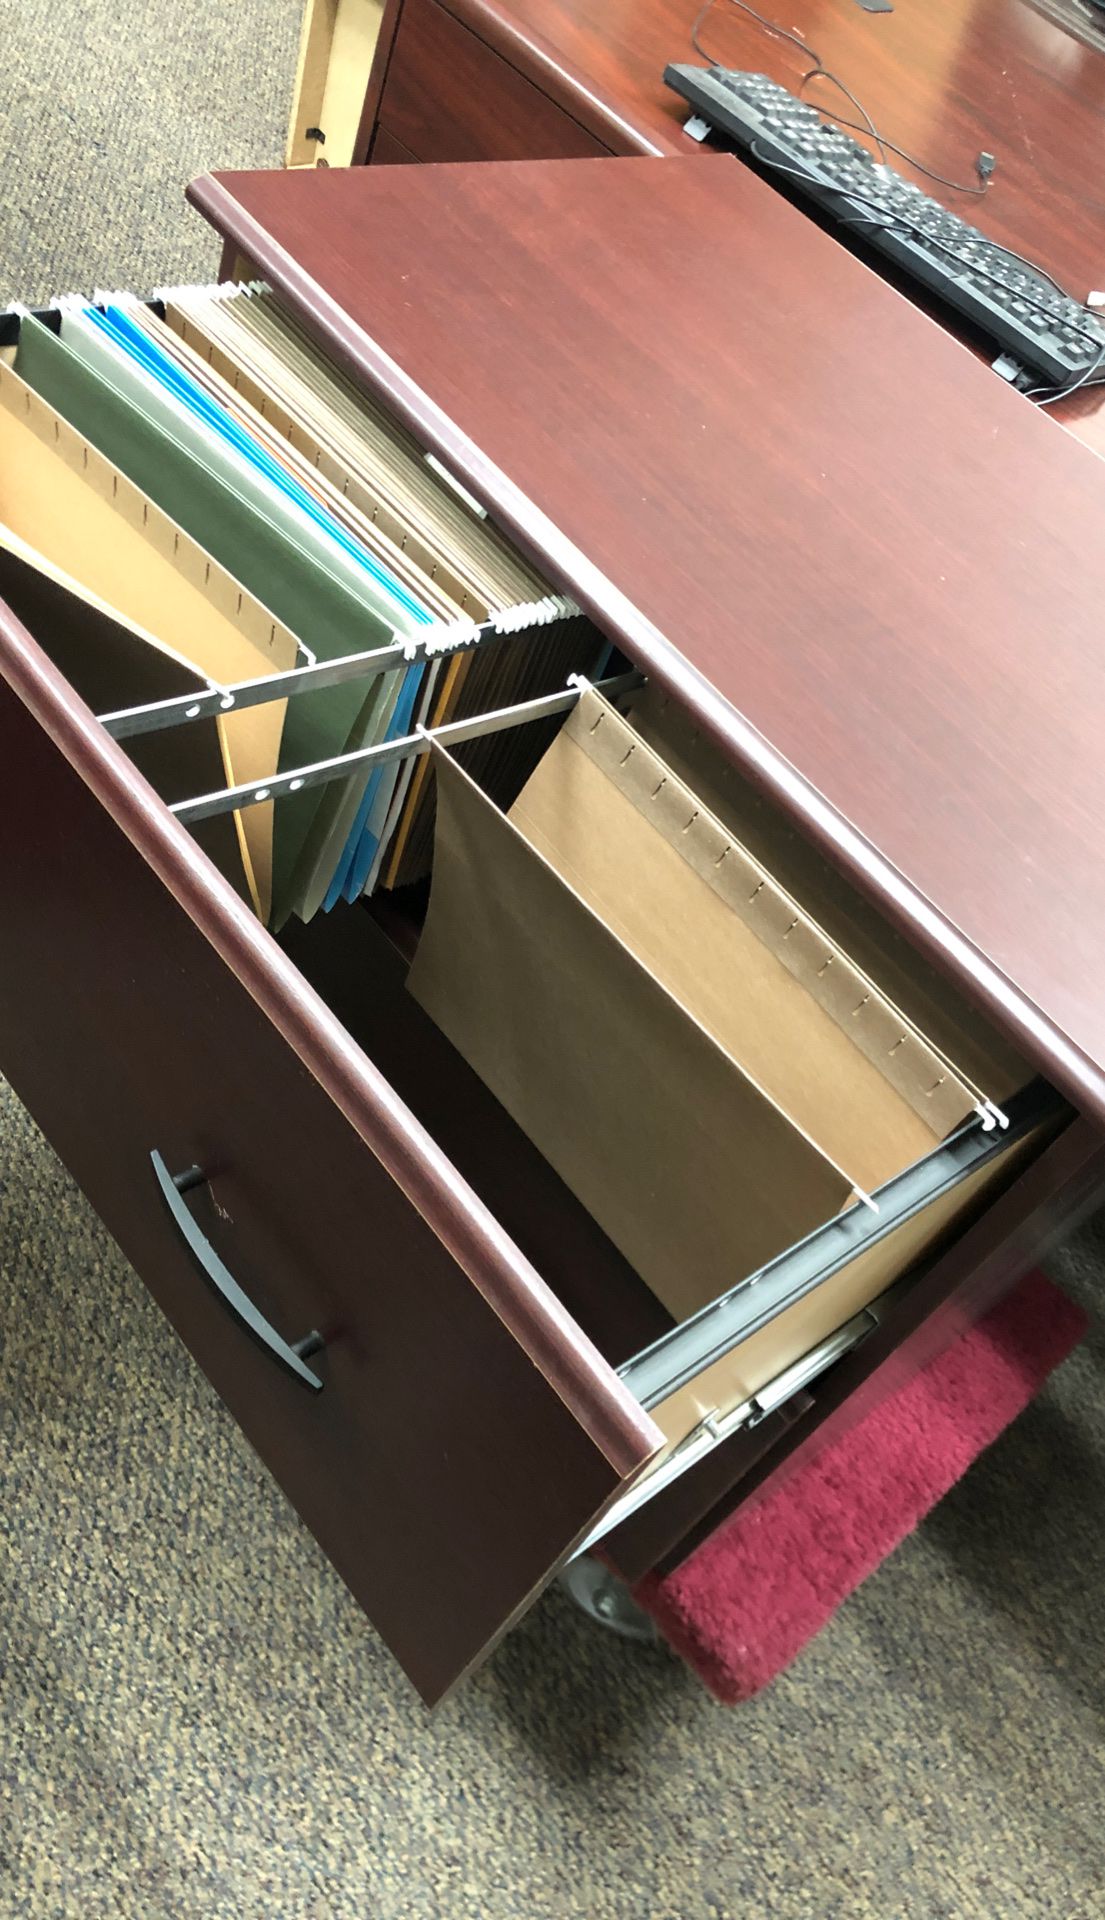 Medium size file cabinets (2)